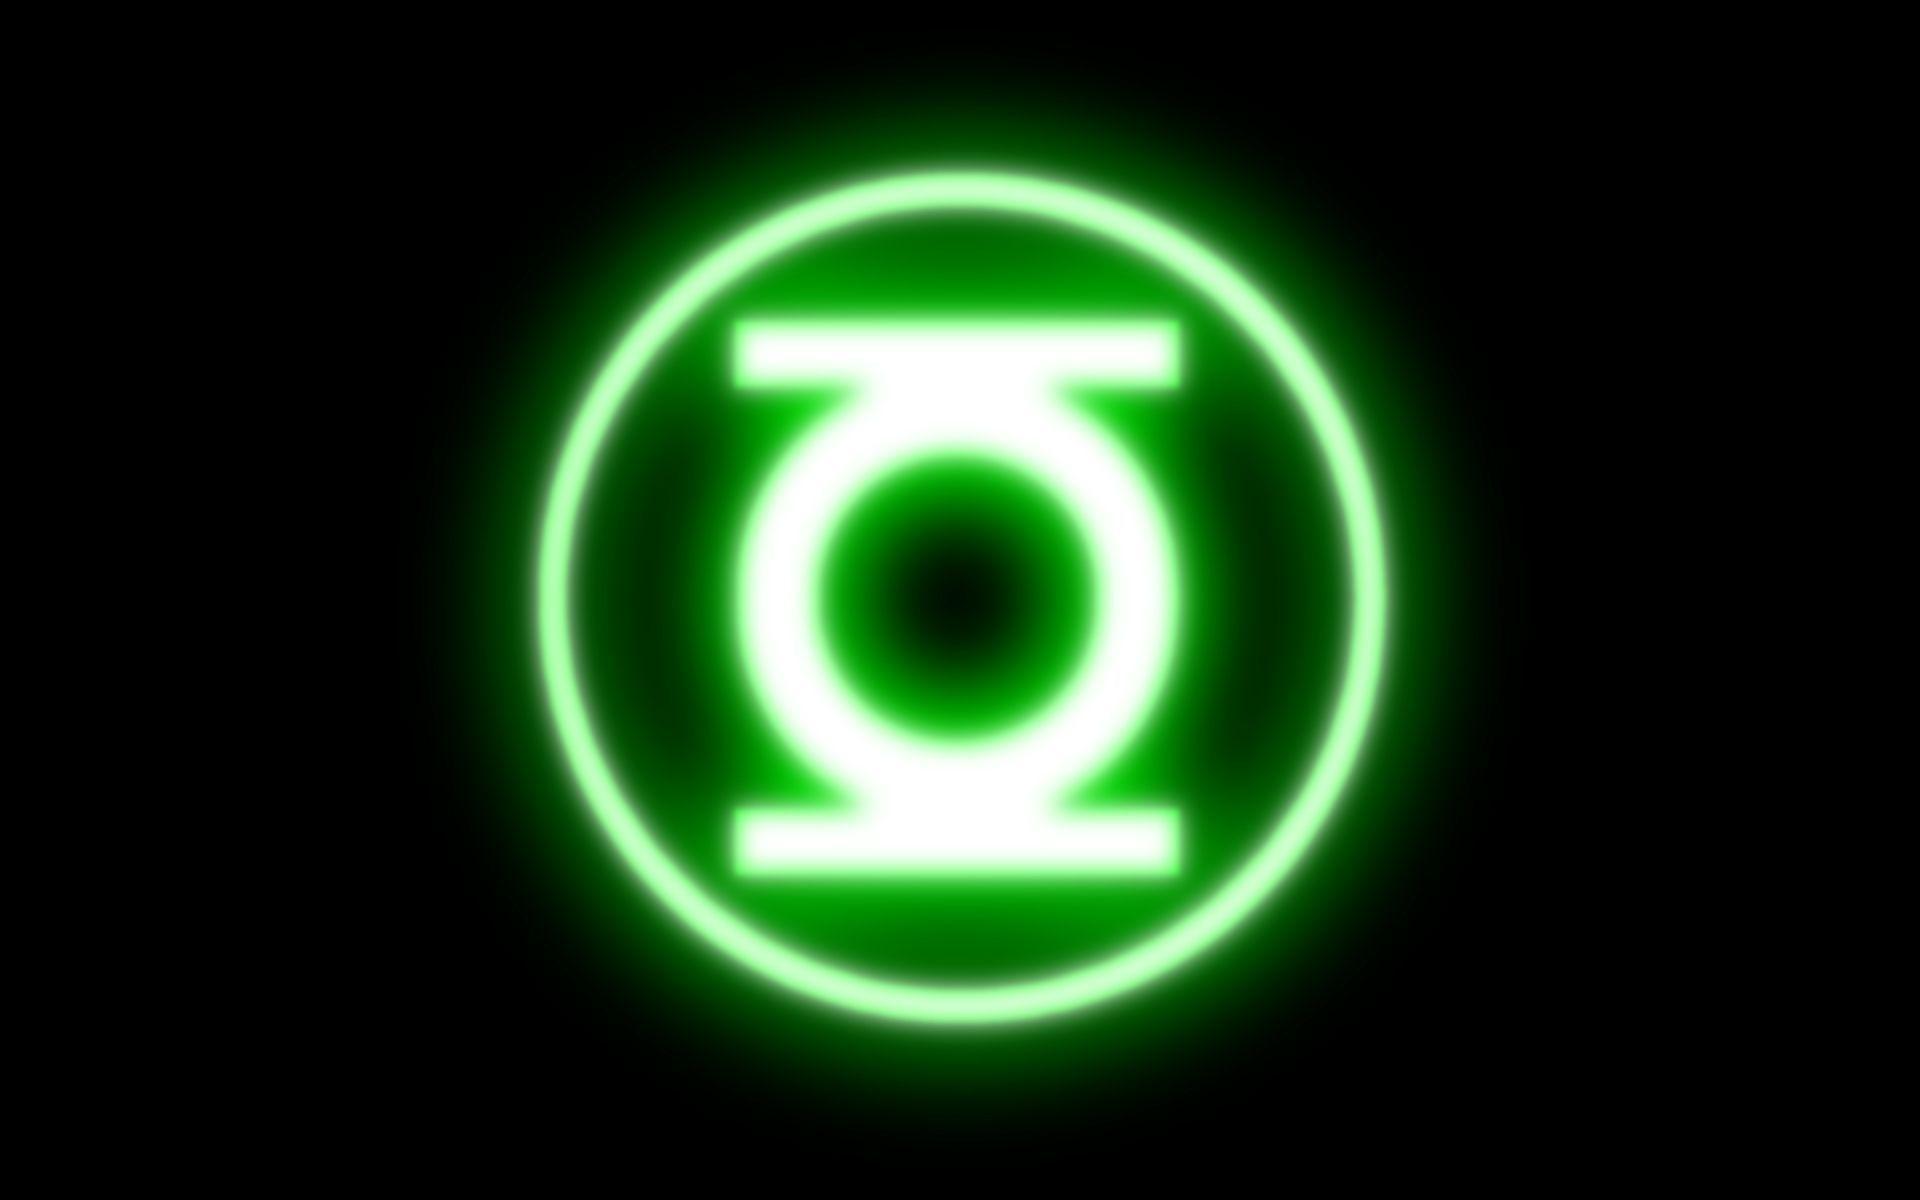 Green Lantern Computer Wallpaper, Desktop Background 1920x1200